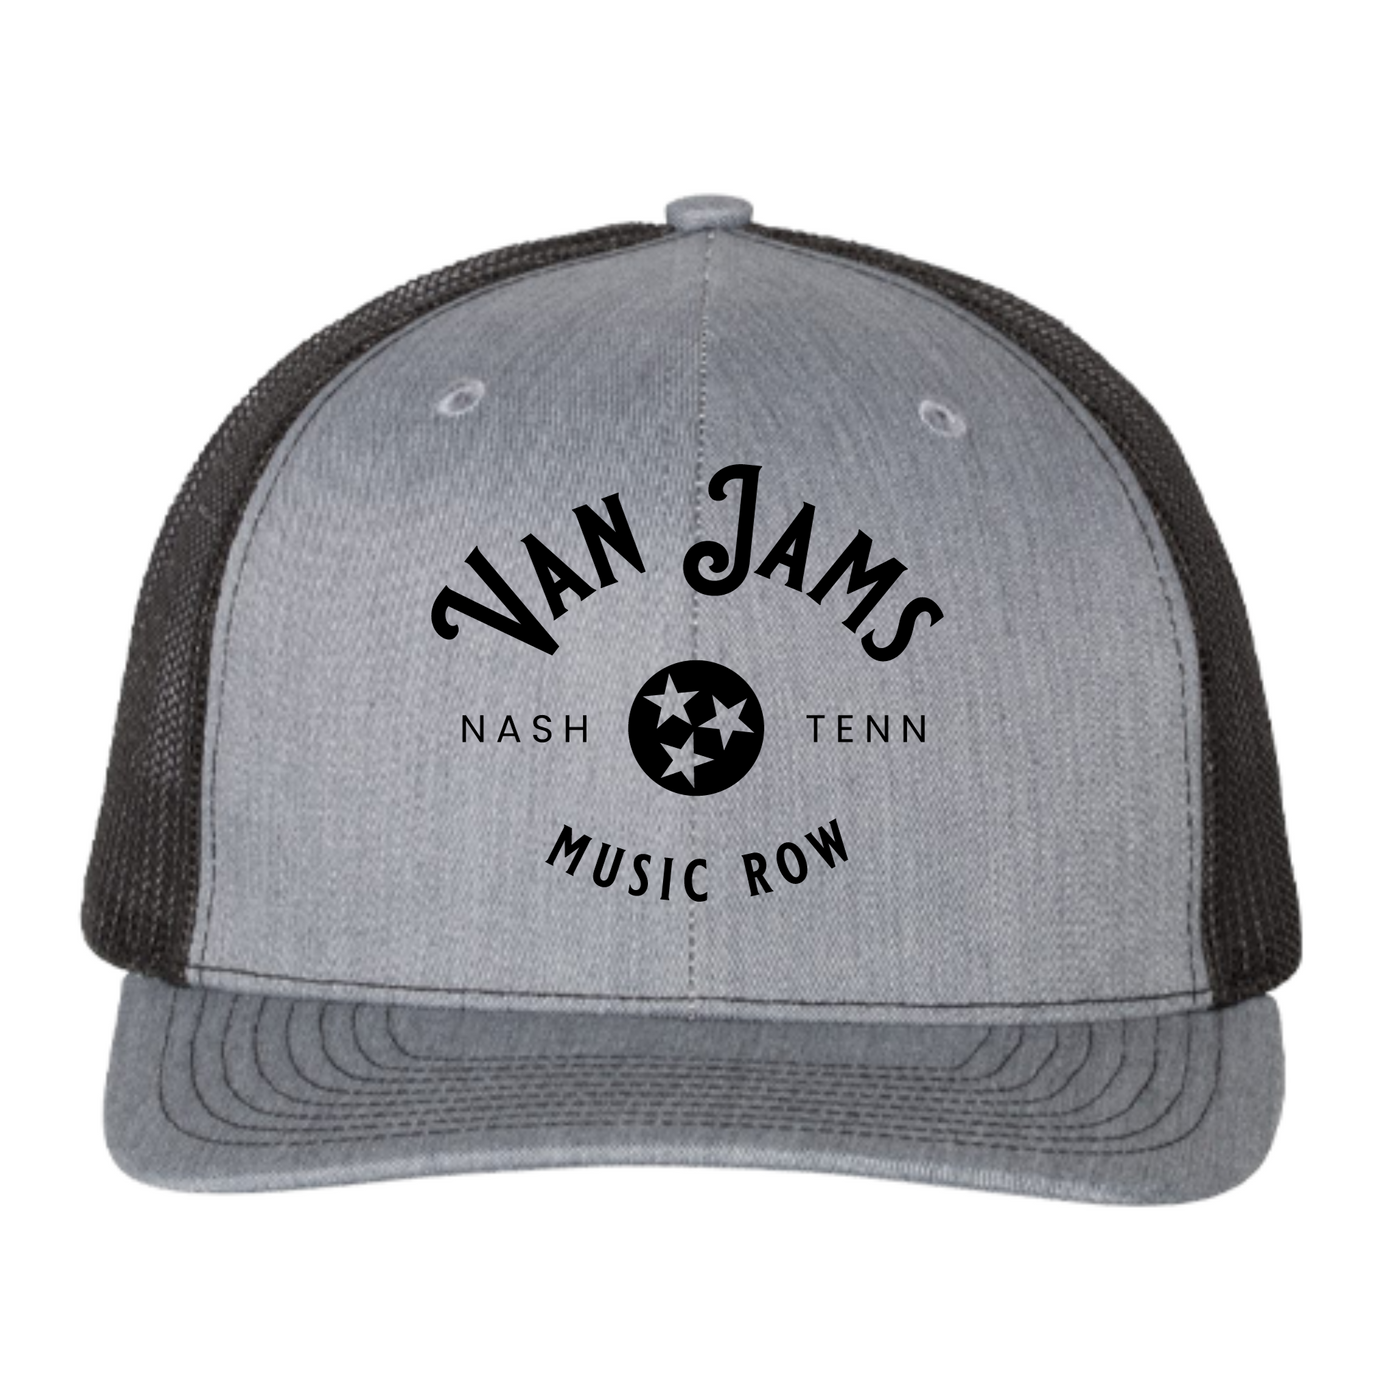 Van Jams - Snap Back Hat: Gray/Black